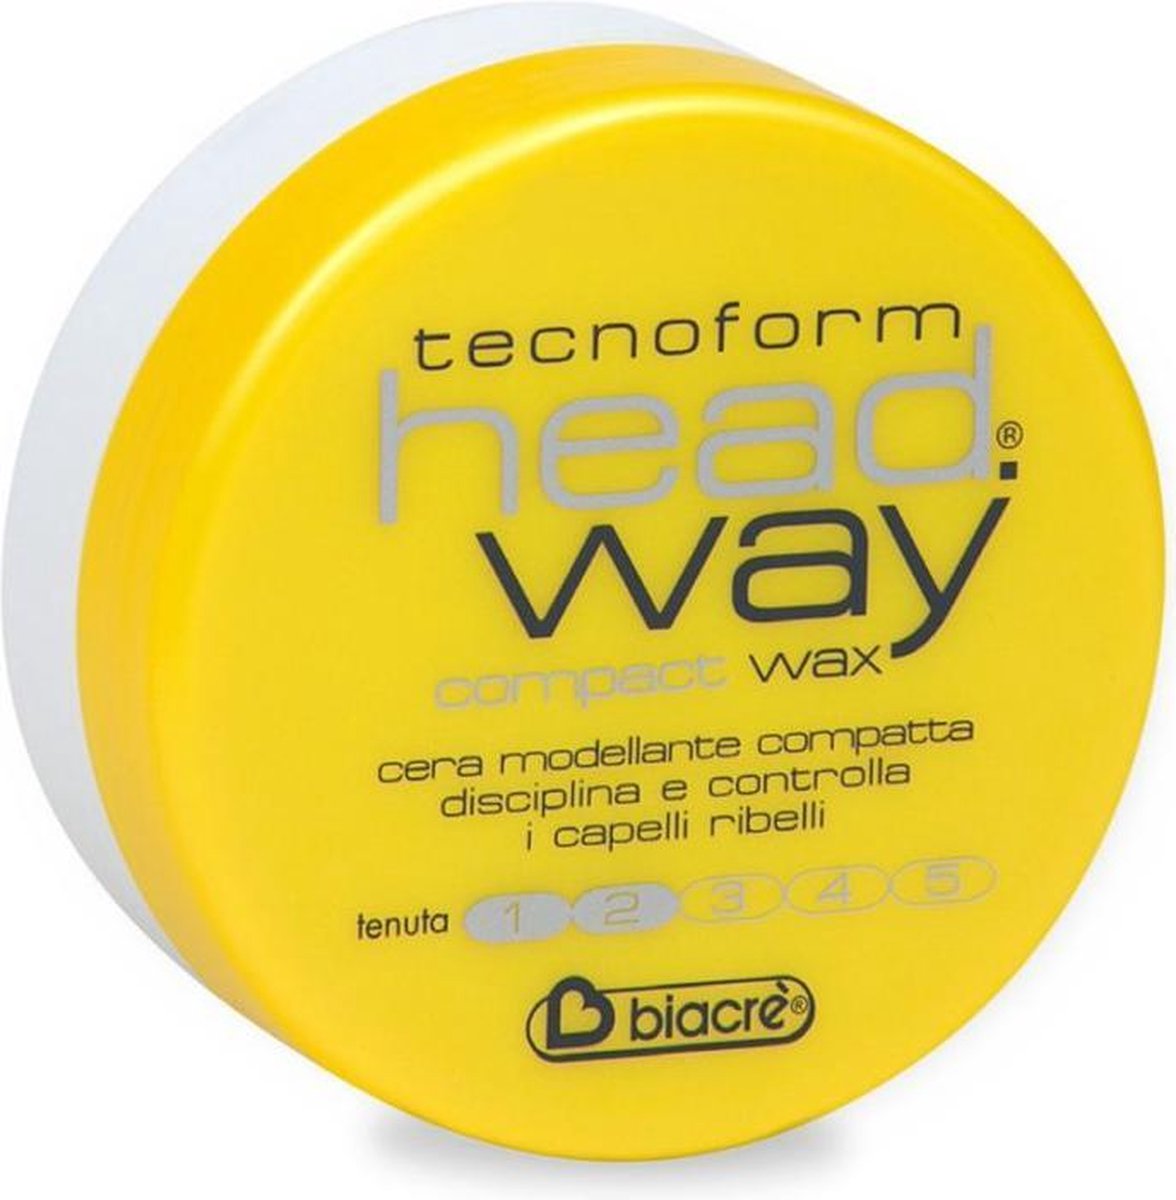 Biacrè Tecnoform Headway Compact Wax